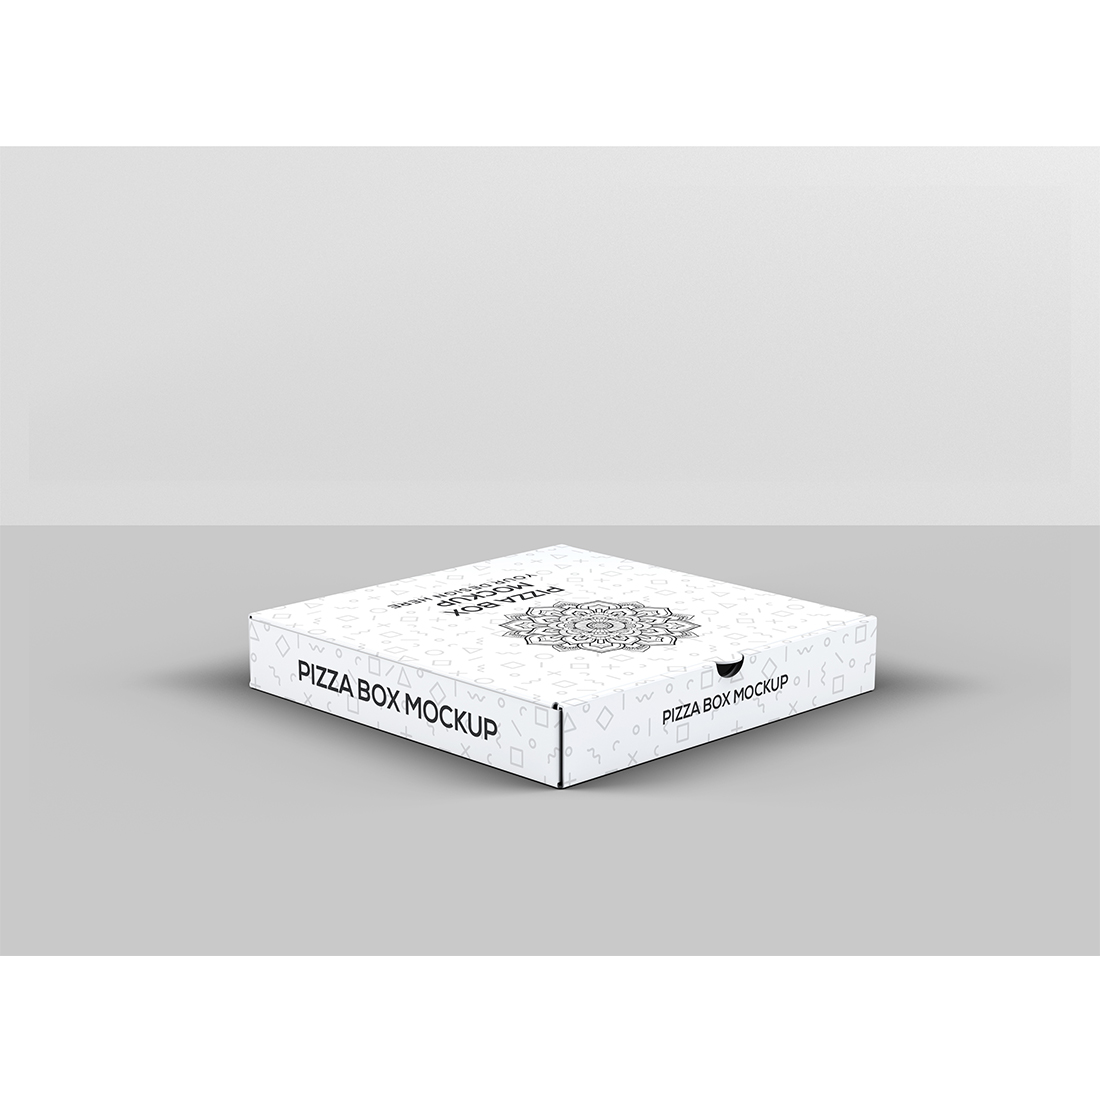 Pizza Box Mockup preview image.